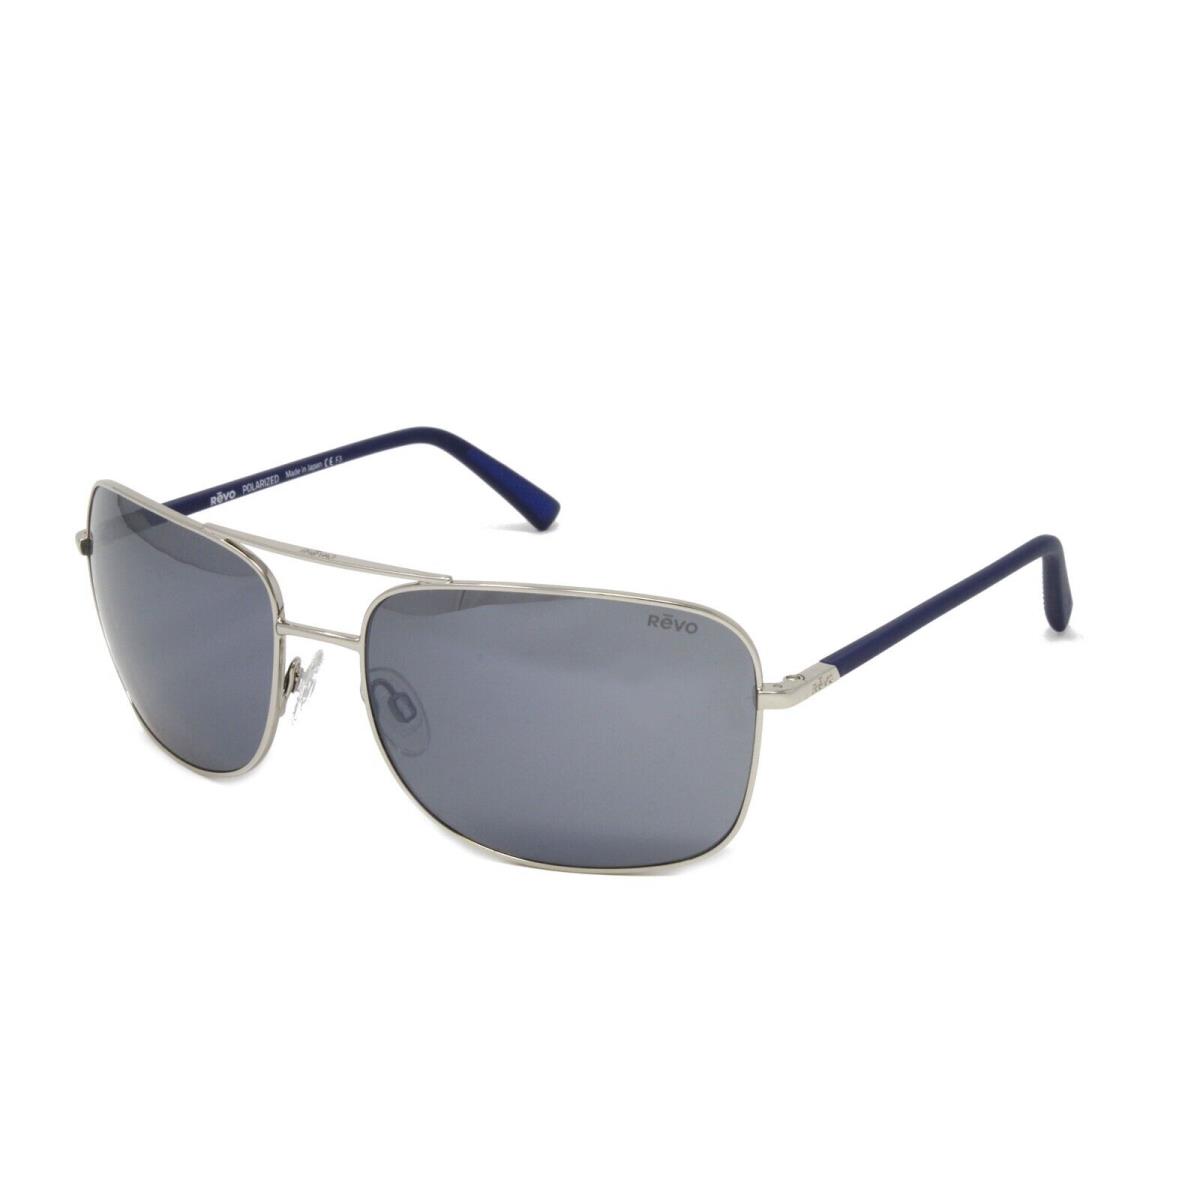 Revo Sunglasses Summit RE1116 03GY Chrome Graphite Polarized Lens 61mm - Frame: Silver, Lens: Gray